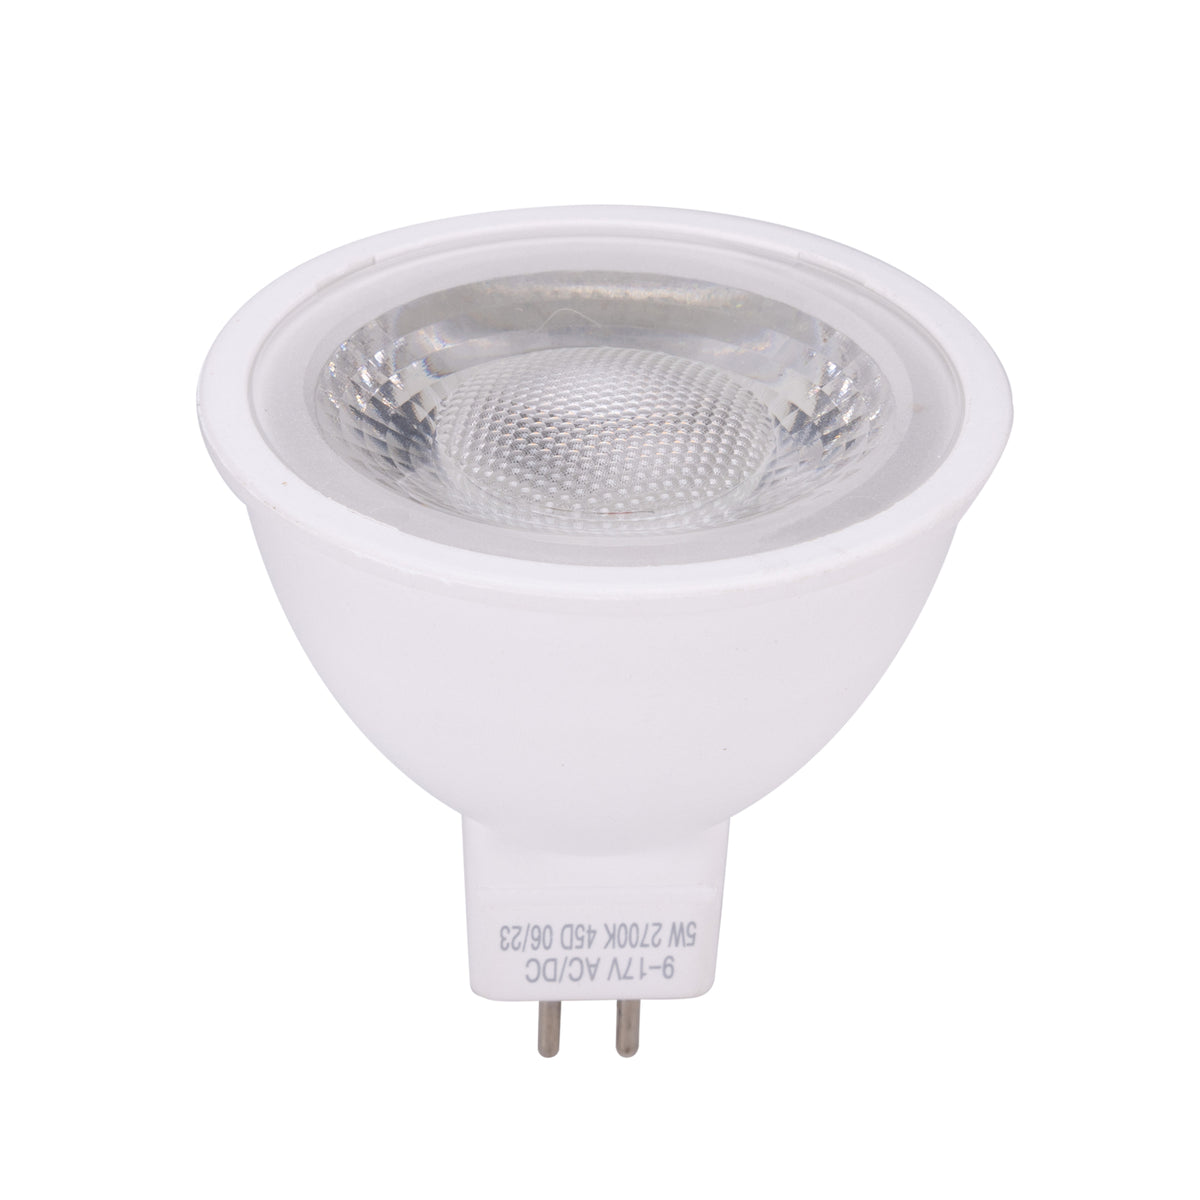 Gardenreet 5W MR16 LED Bulb, 2700K Warm White, AC/DC 12V Low